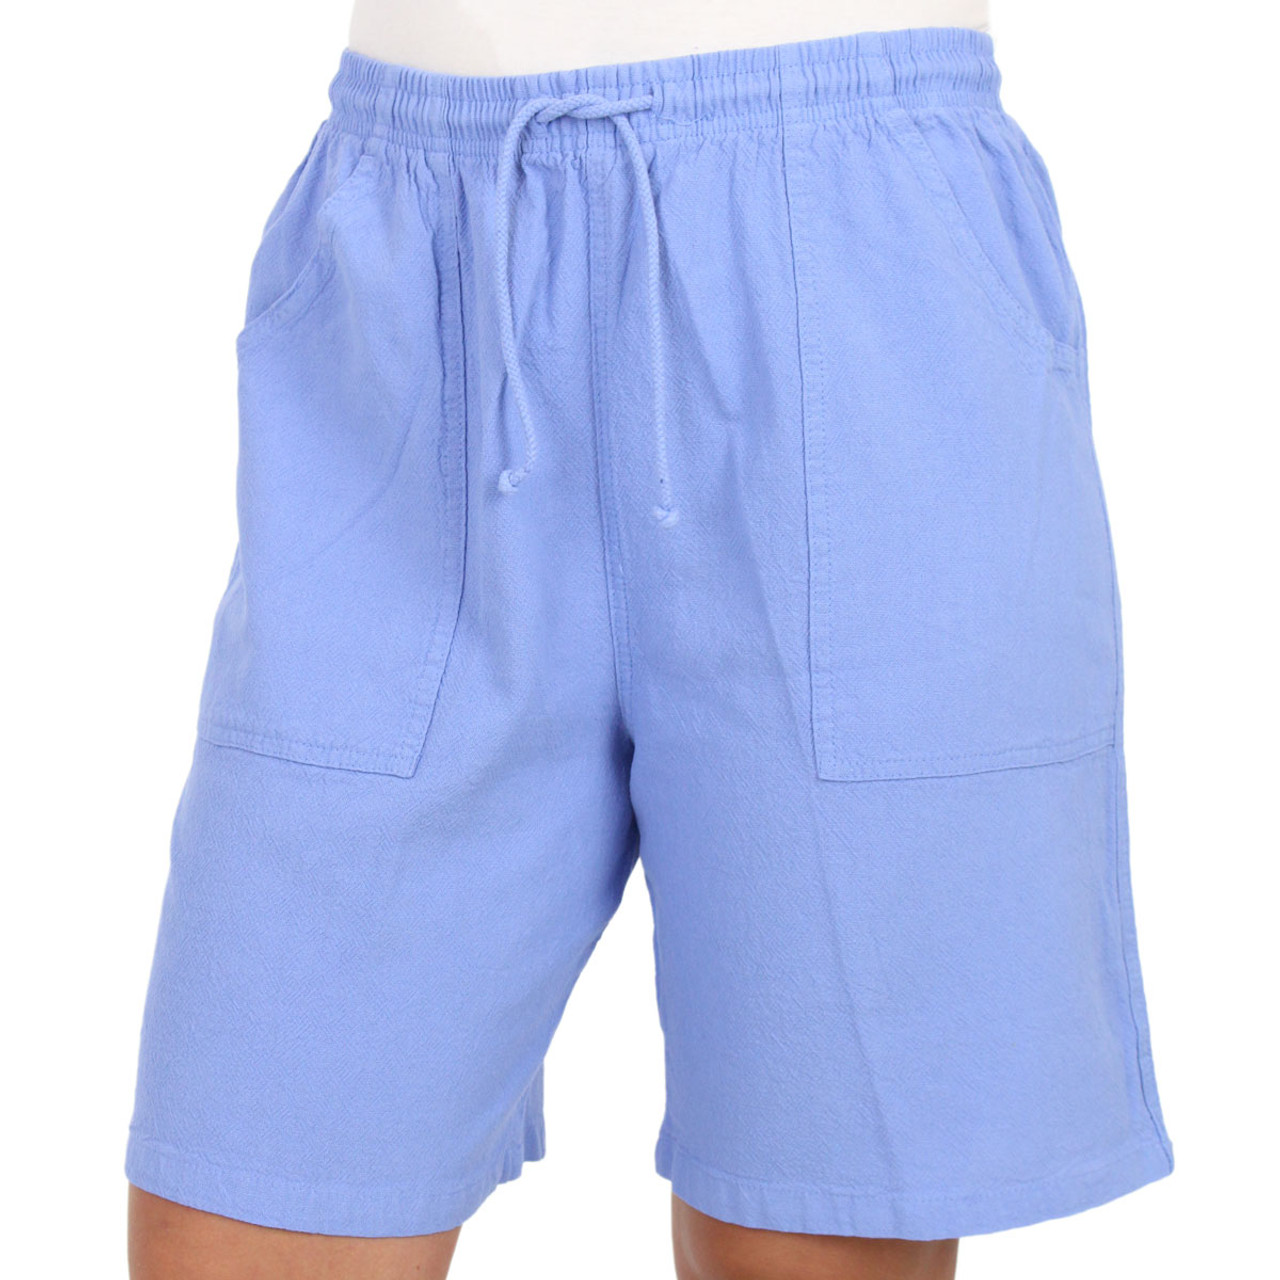 Crinkle Cotton Bermuda Shorts by Sea Breeze